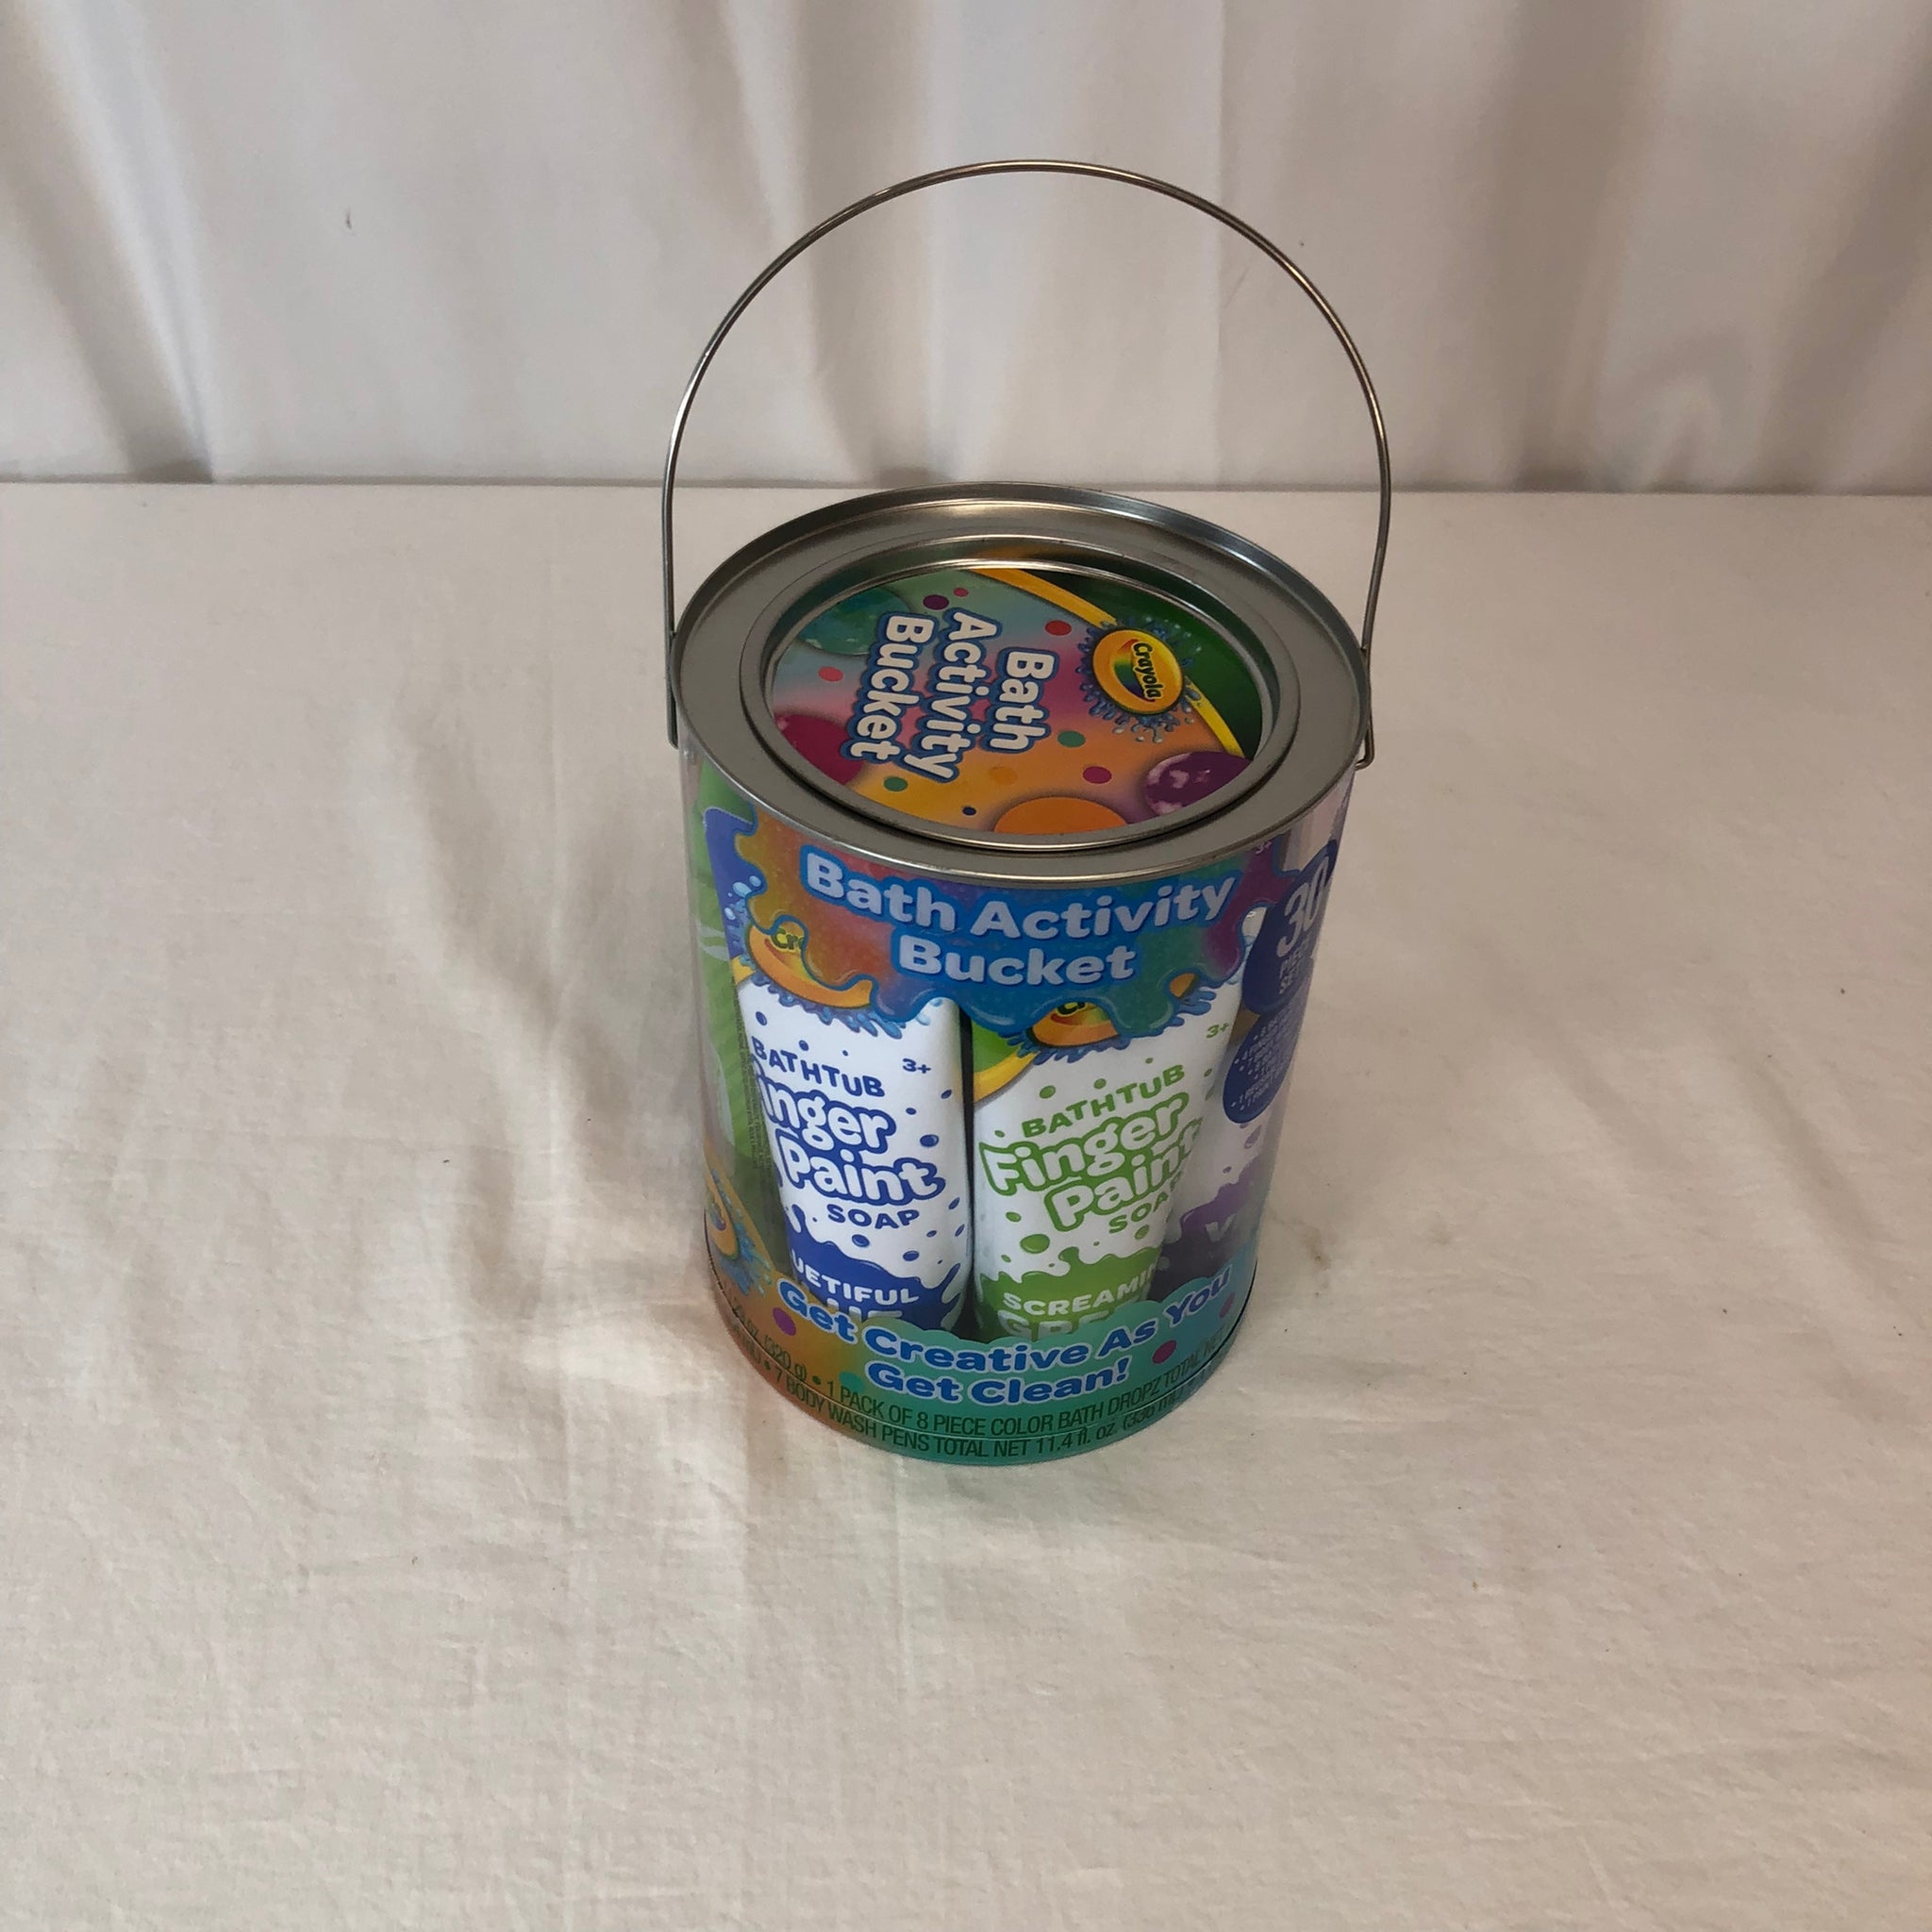 Crayola Bath Activity Bucket, Variety Pack, 30 Count